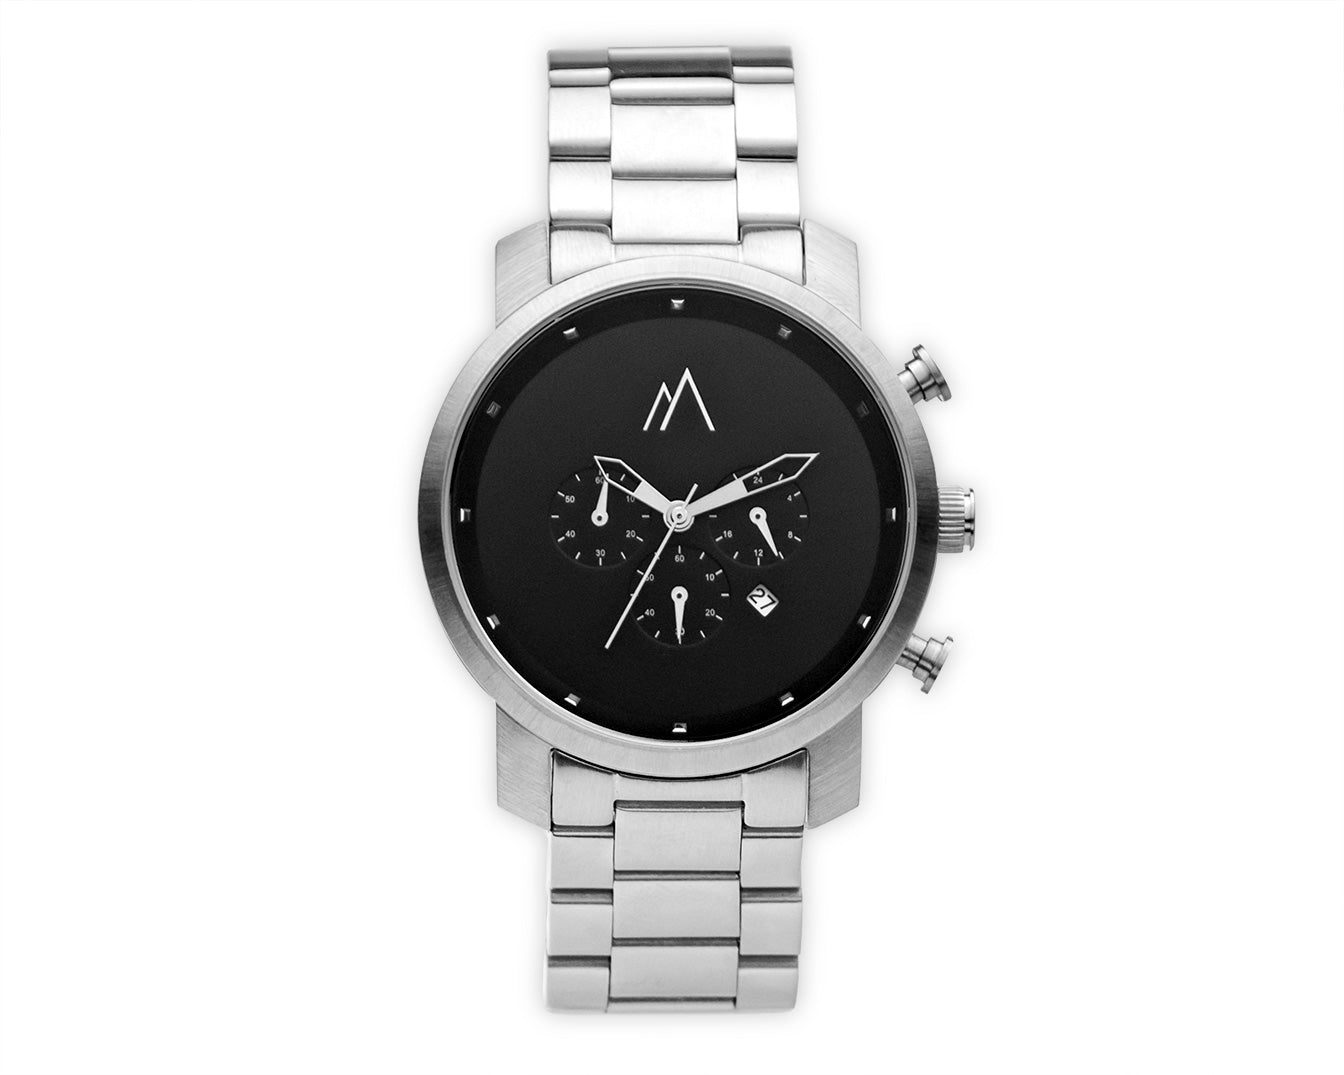 Quartz chronograph date watch metallic bands silver black